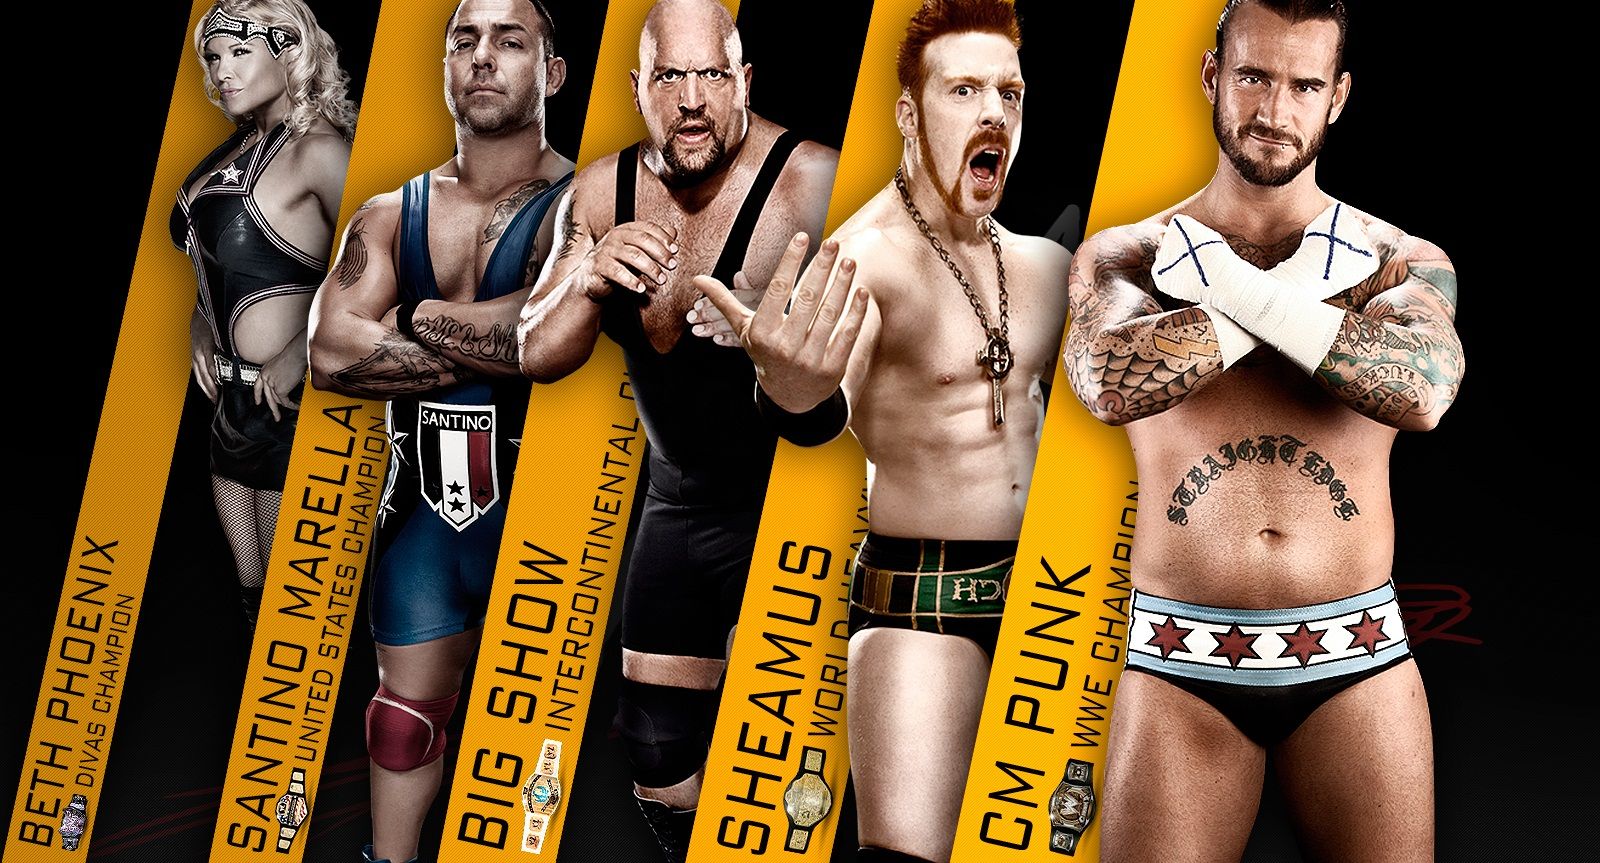 WWE Champions wallpaper